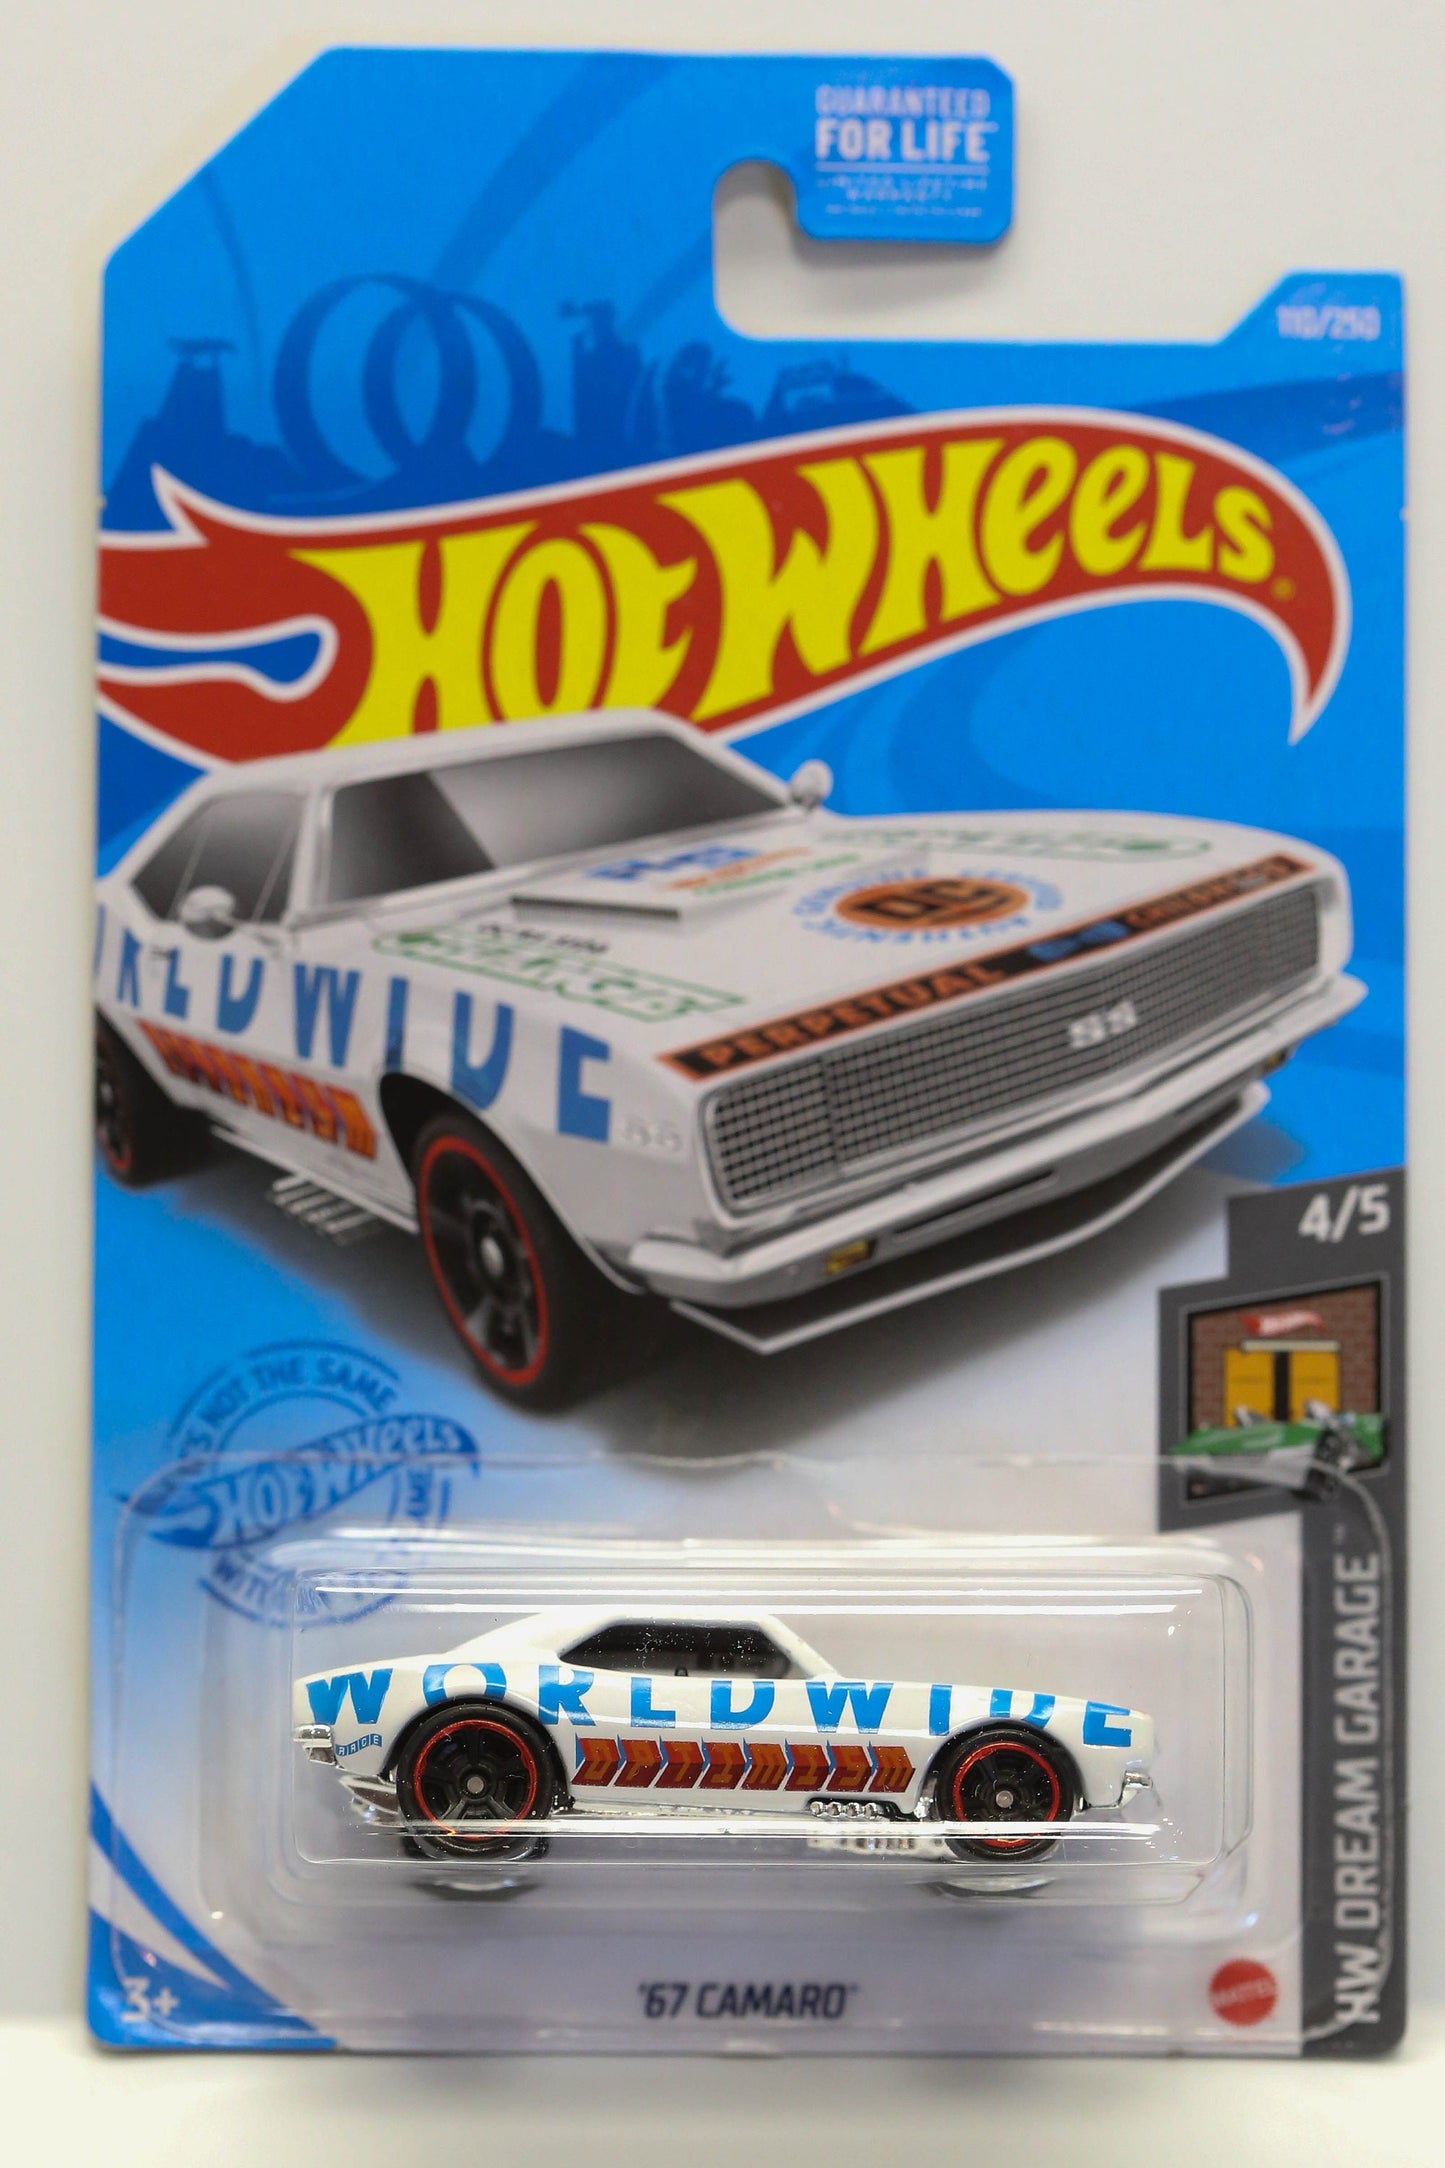 Hot Wheels '67 Camaro HW Dream Garage GRY12 - Plus (+) a Bonus Hot Wheel